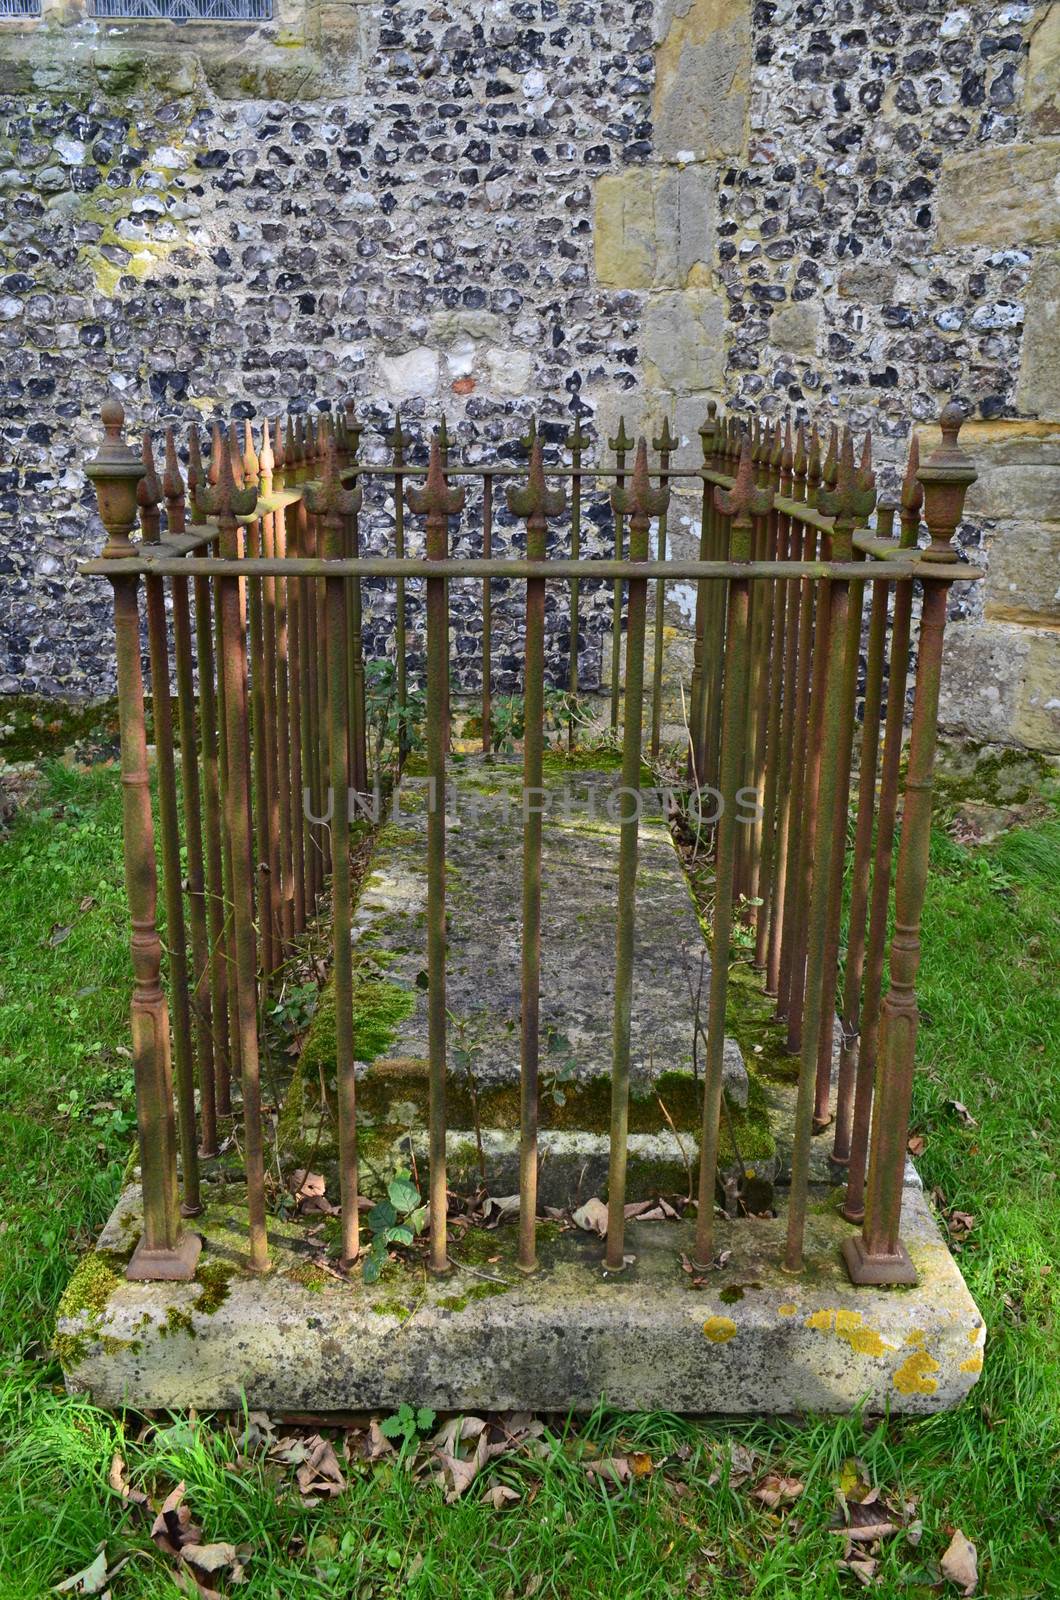 Mid19th century grave at a English churchyard.